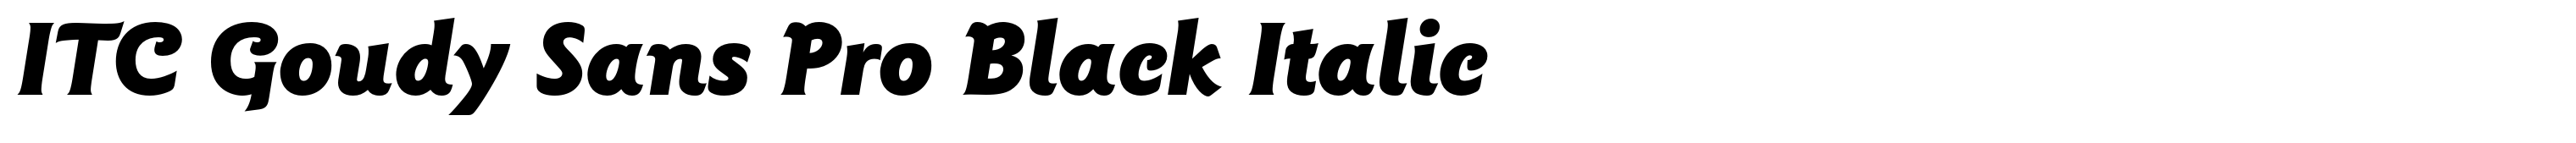 ITC Goudy Sans Pro Black Italic